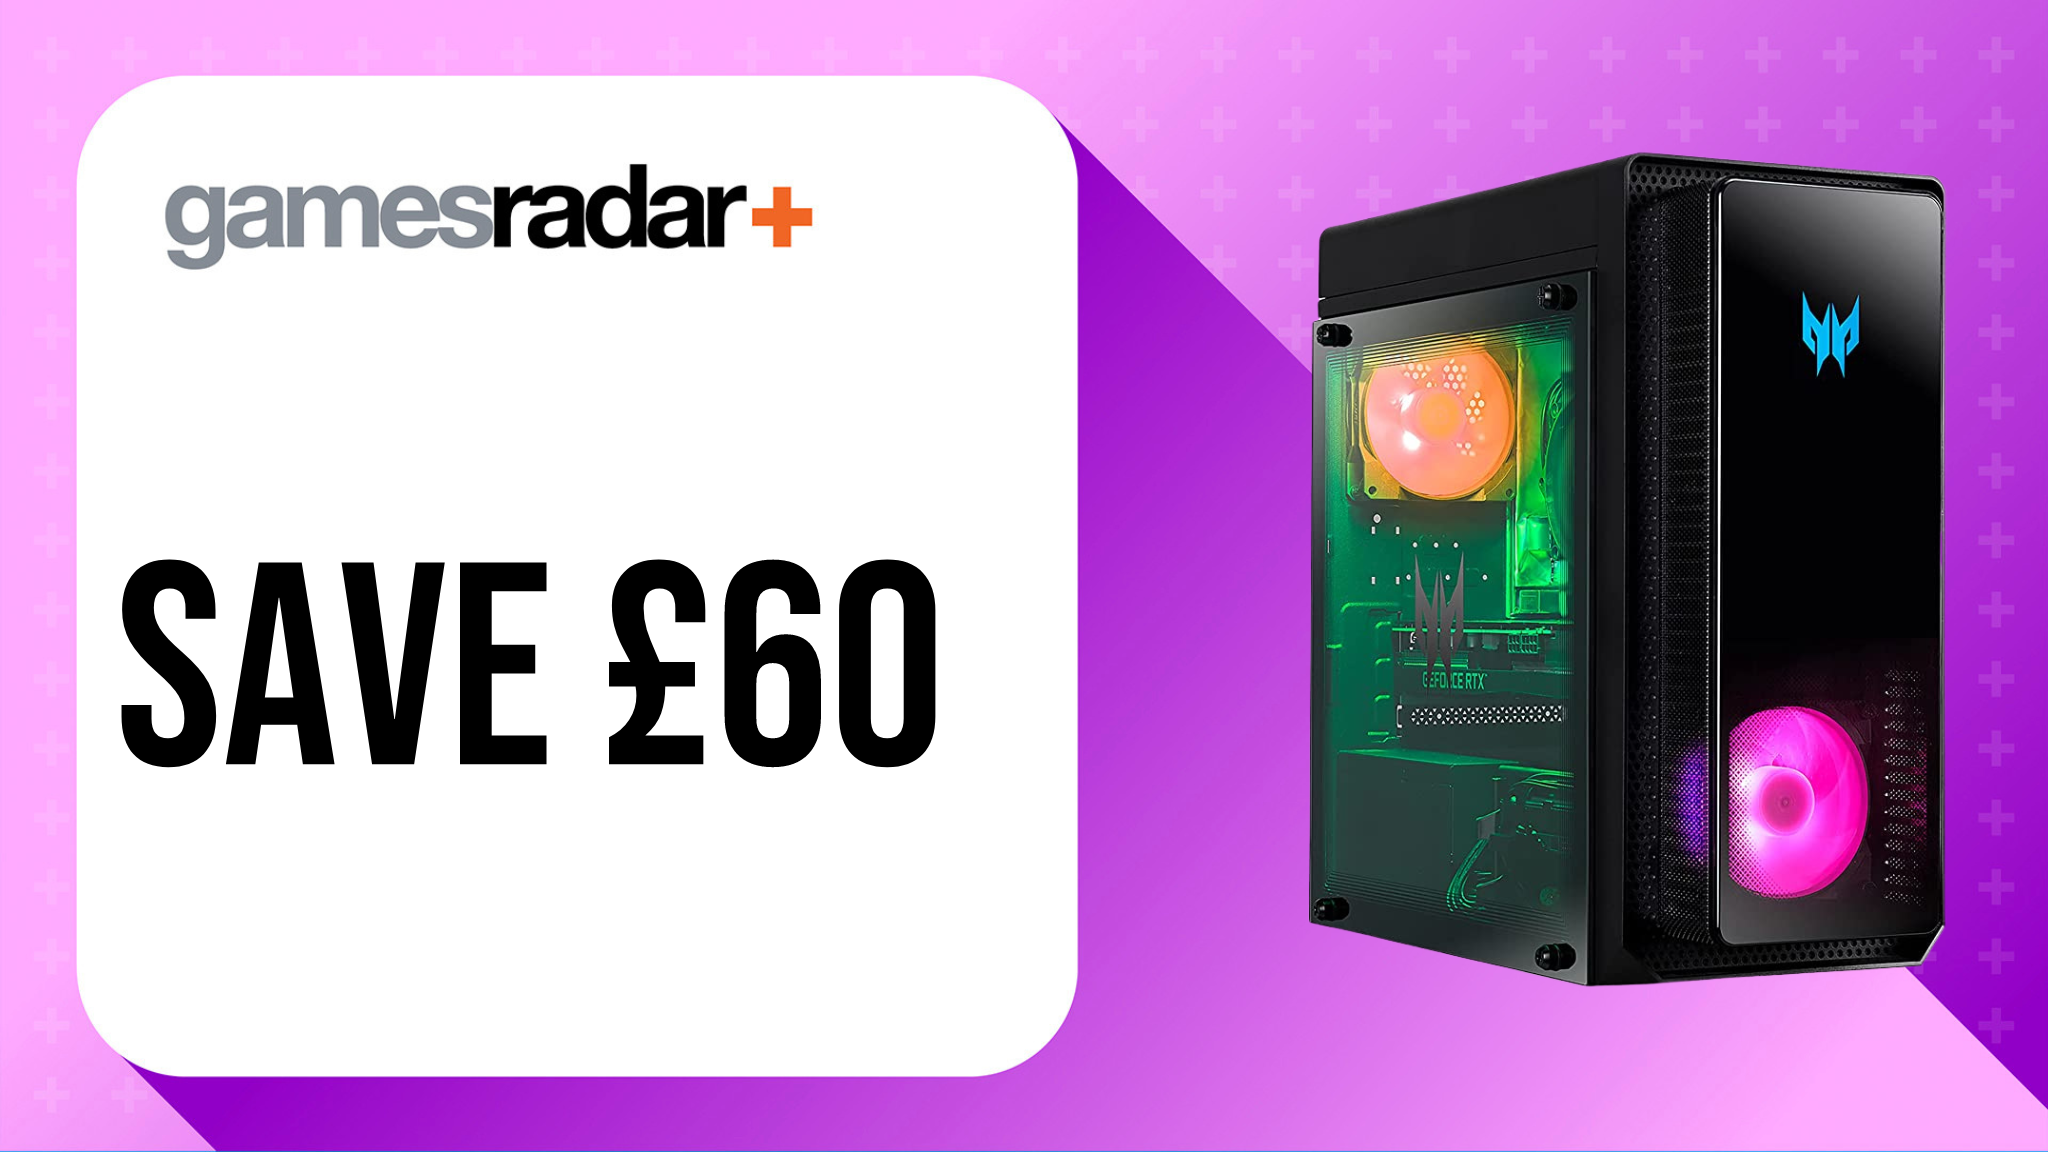 Acer Predator Orion 3000 deal image with £60 saving